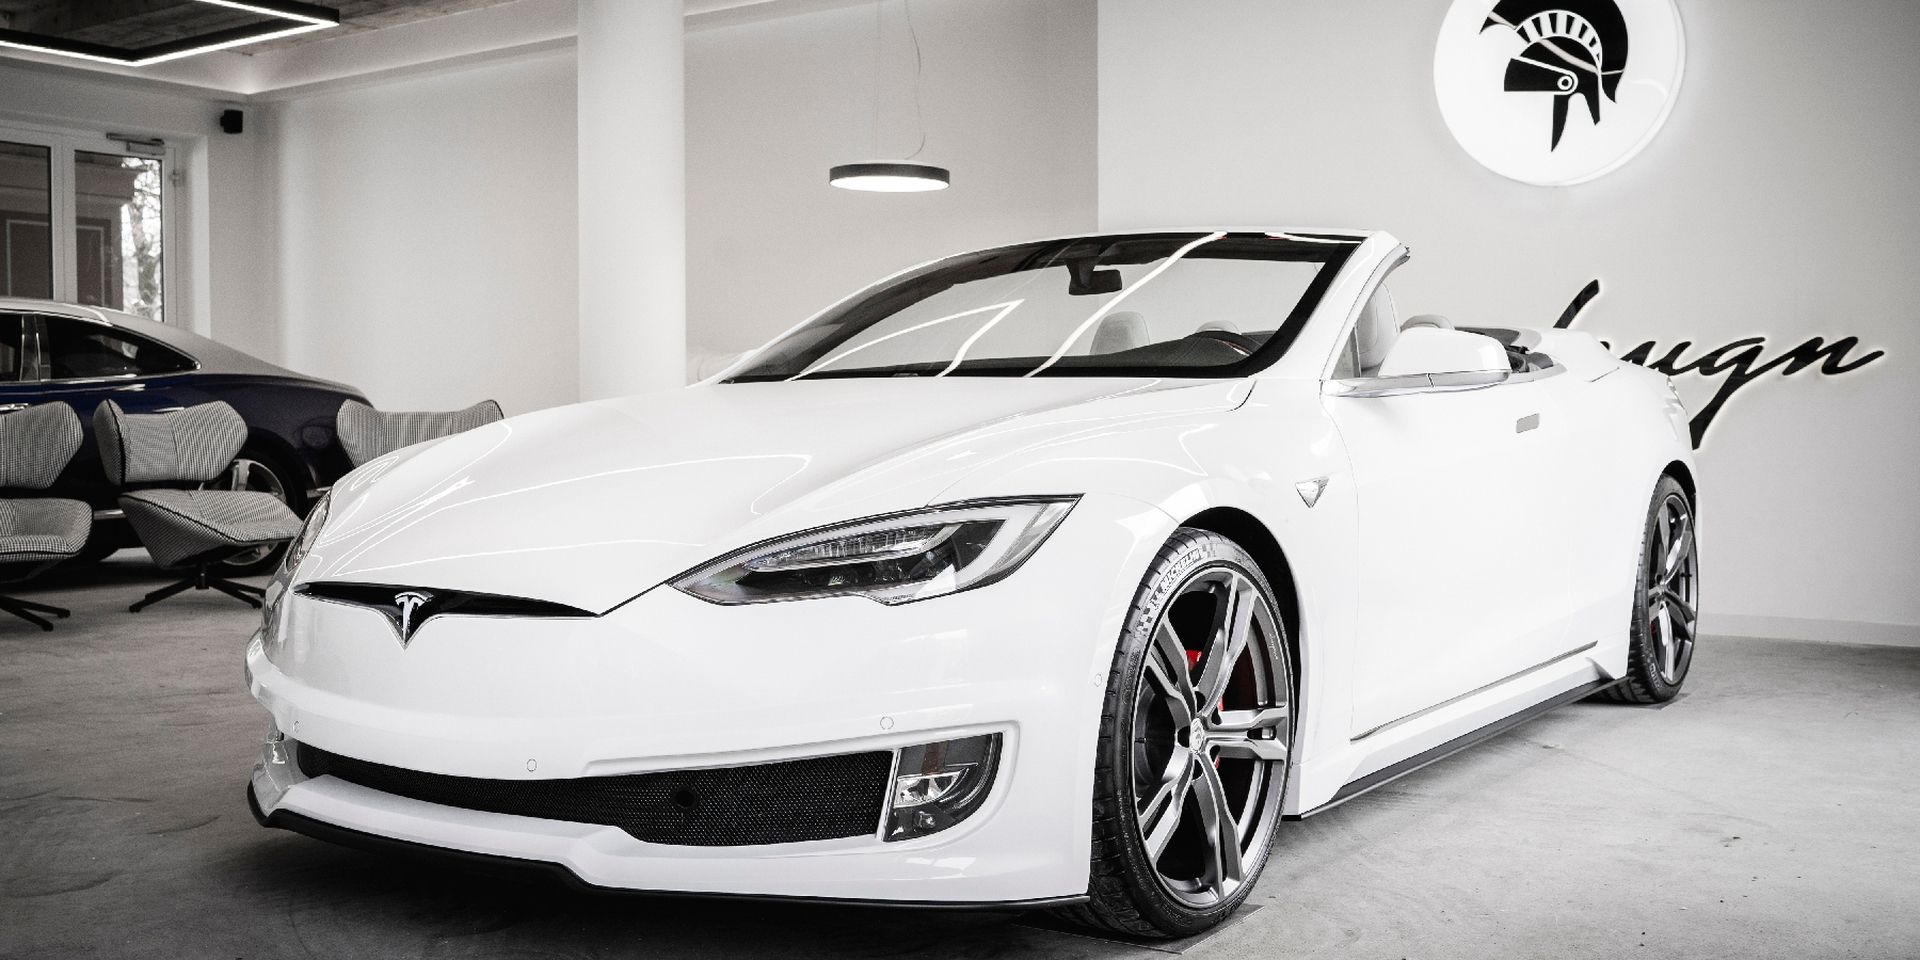 Ares Tesla Model convertible conversion